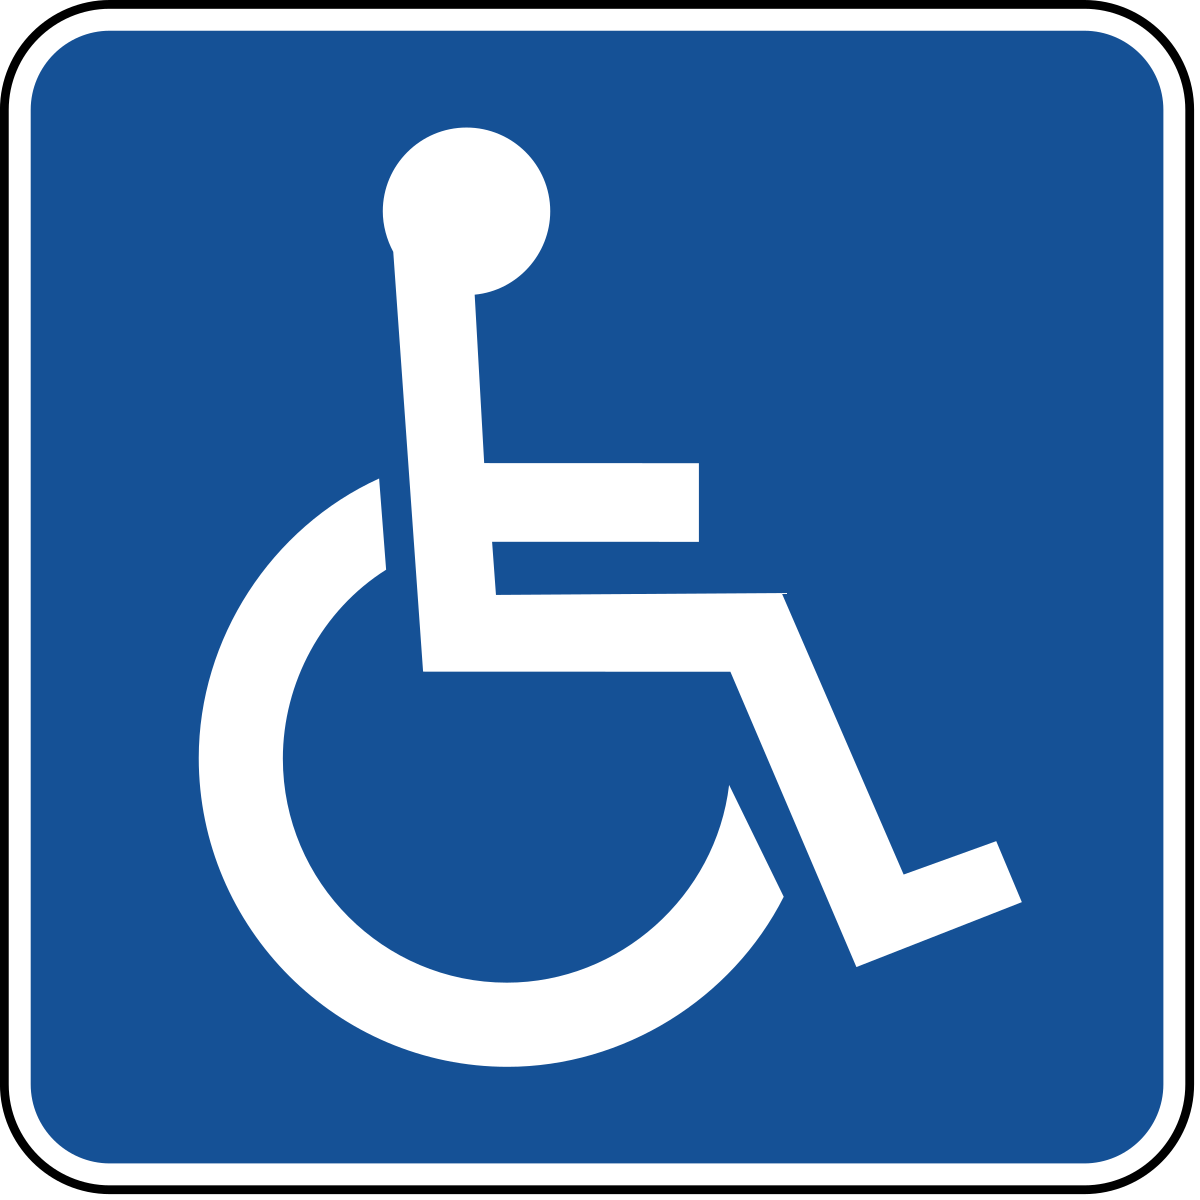 Accessibility Compliant Content